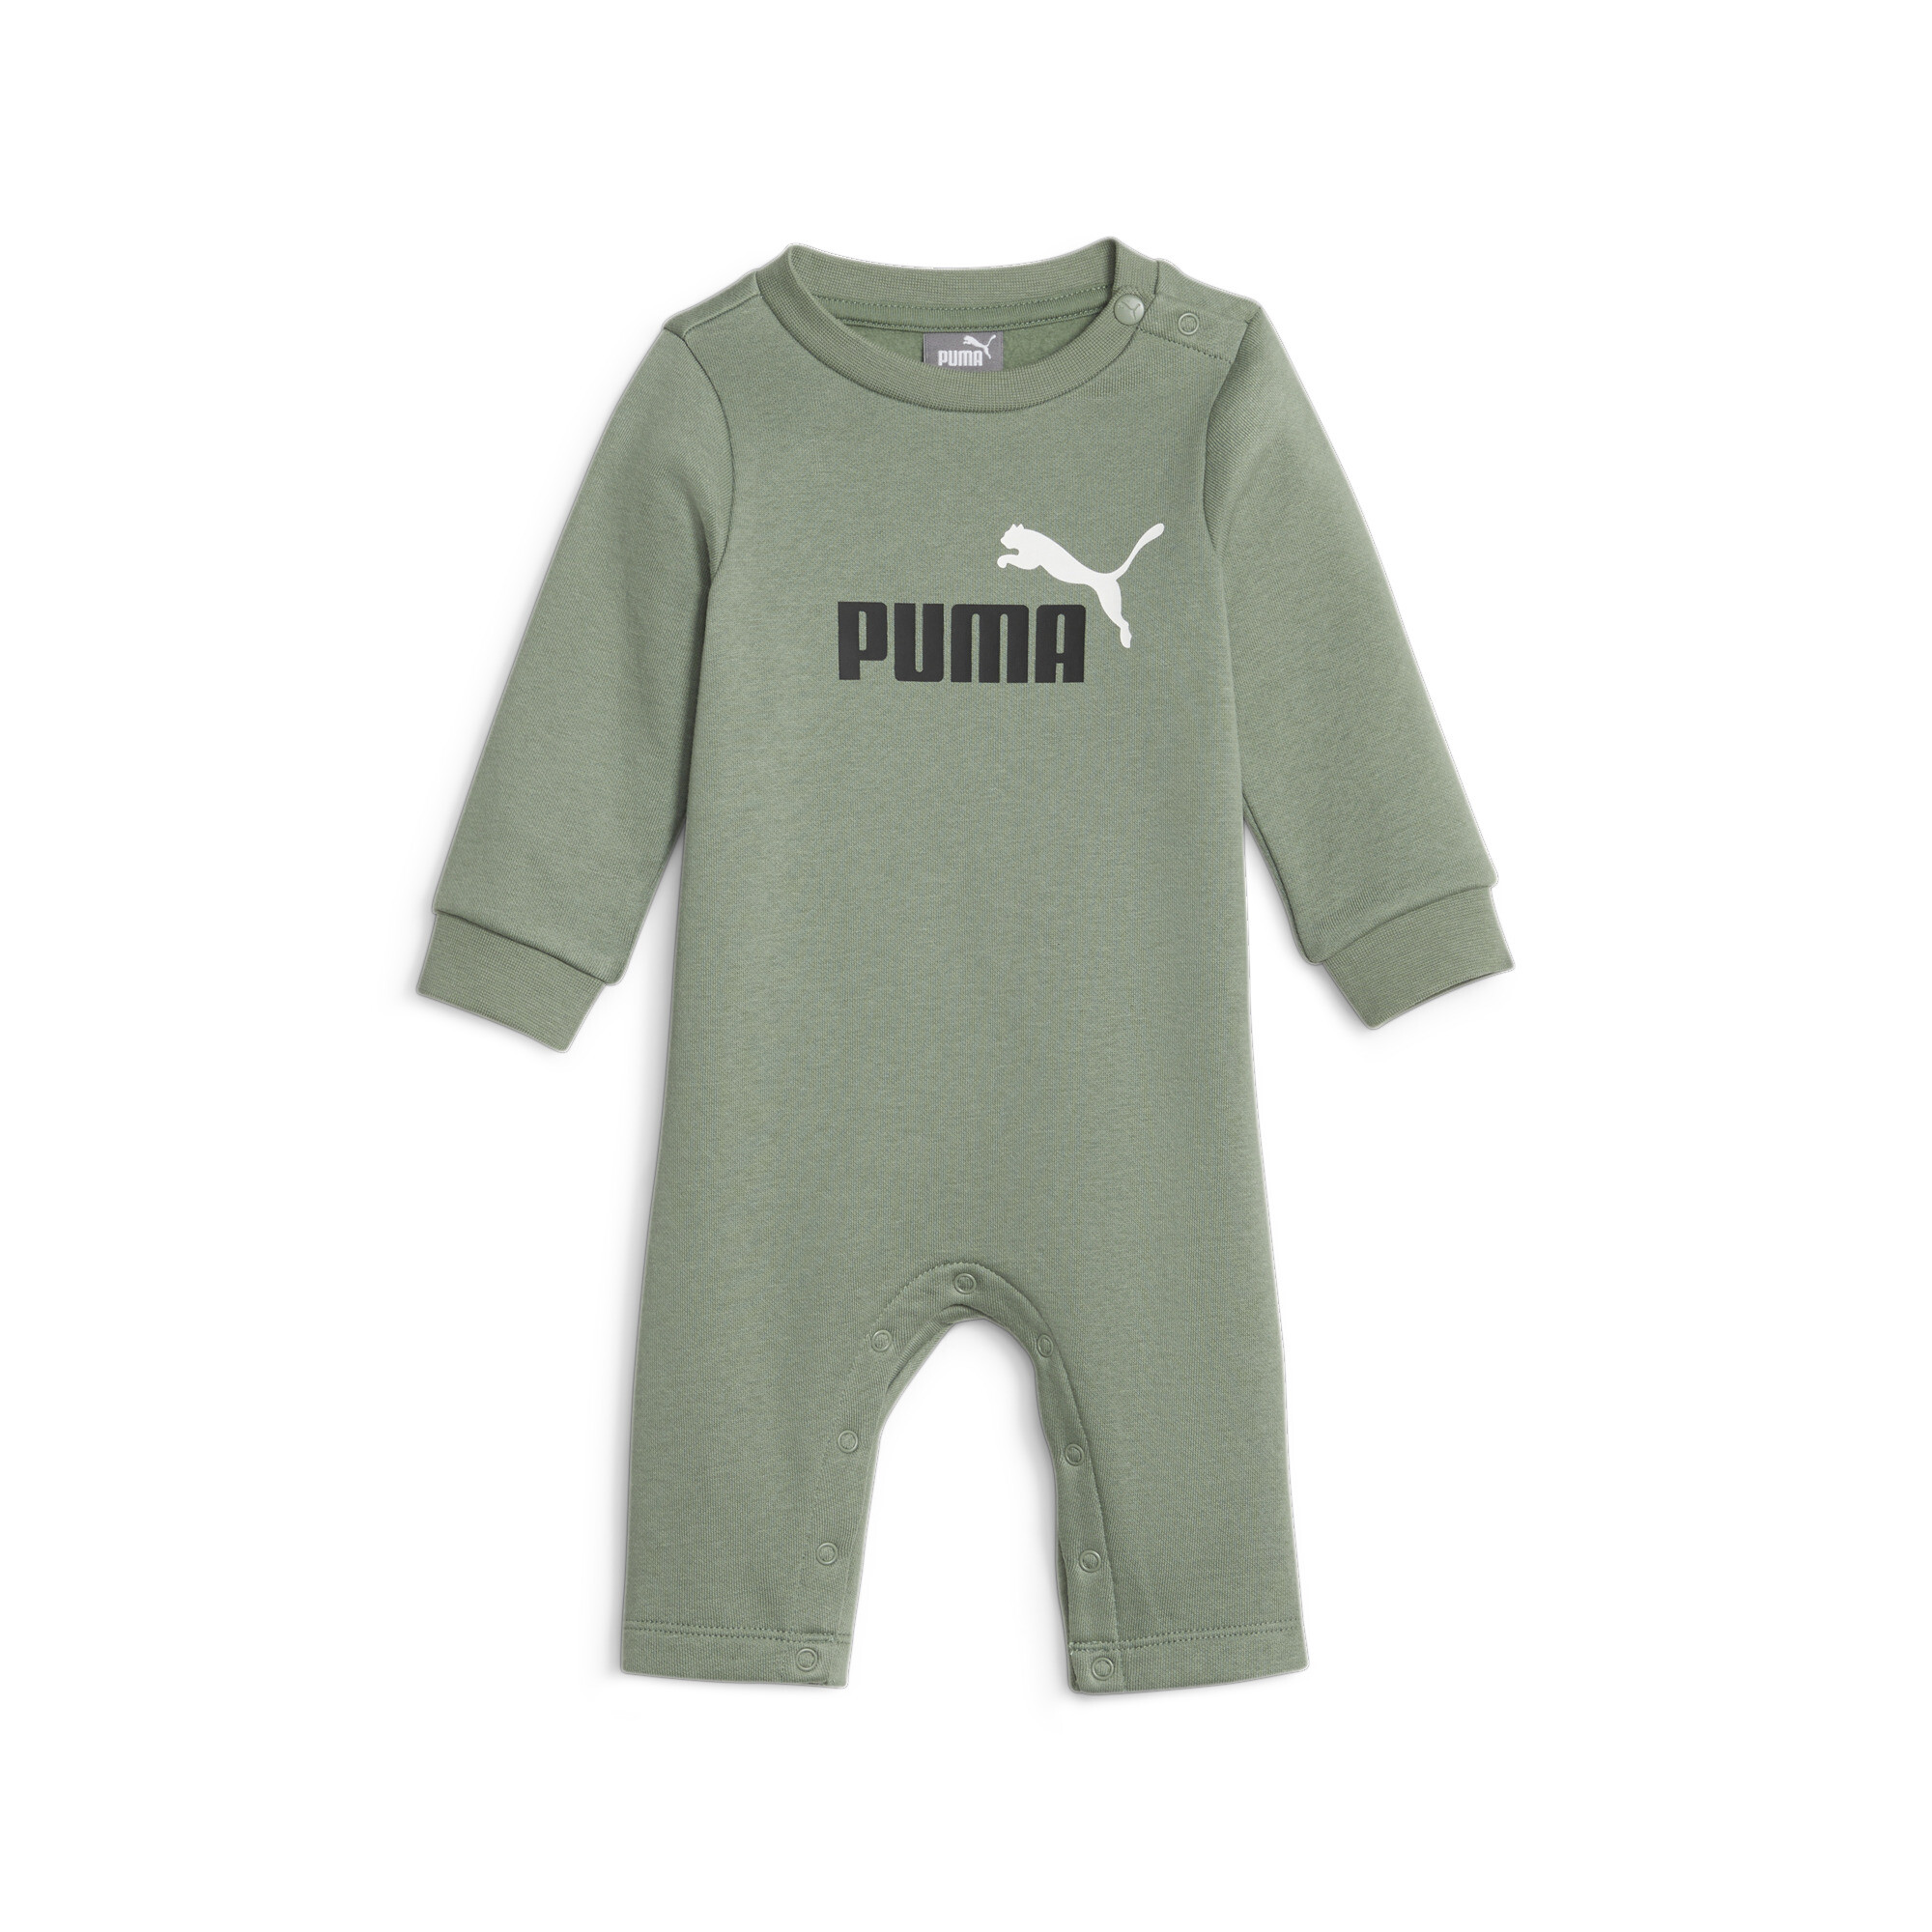 Puma Minicats Newborn Coverall Babies, Green, Size 1-2M, Clothing